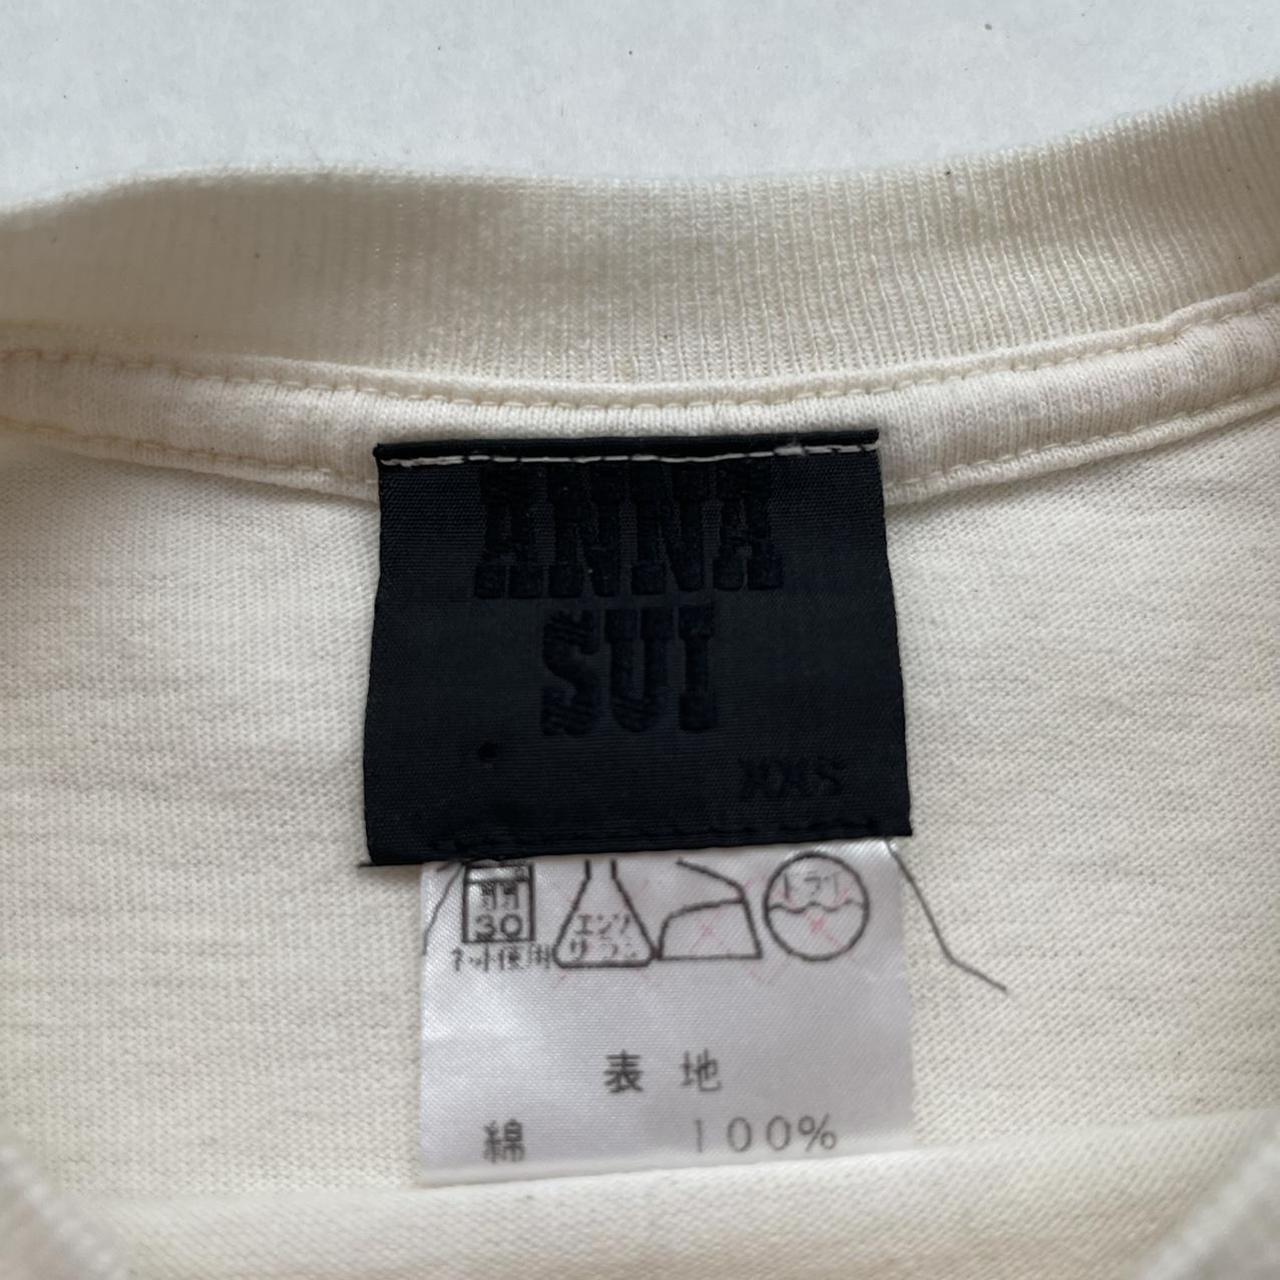 Anna Sui off-white/cream t-shirt top ‧₊˚ 彡 $6.50... - Depop